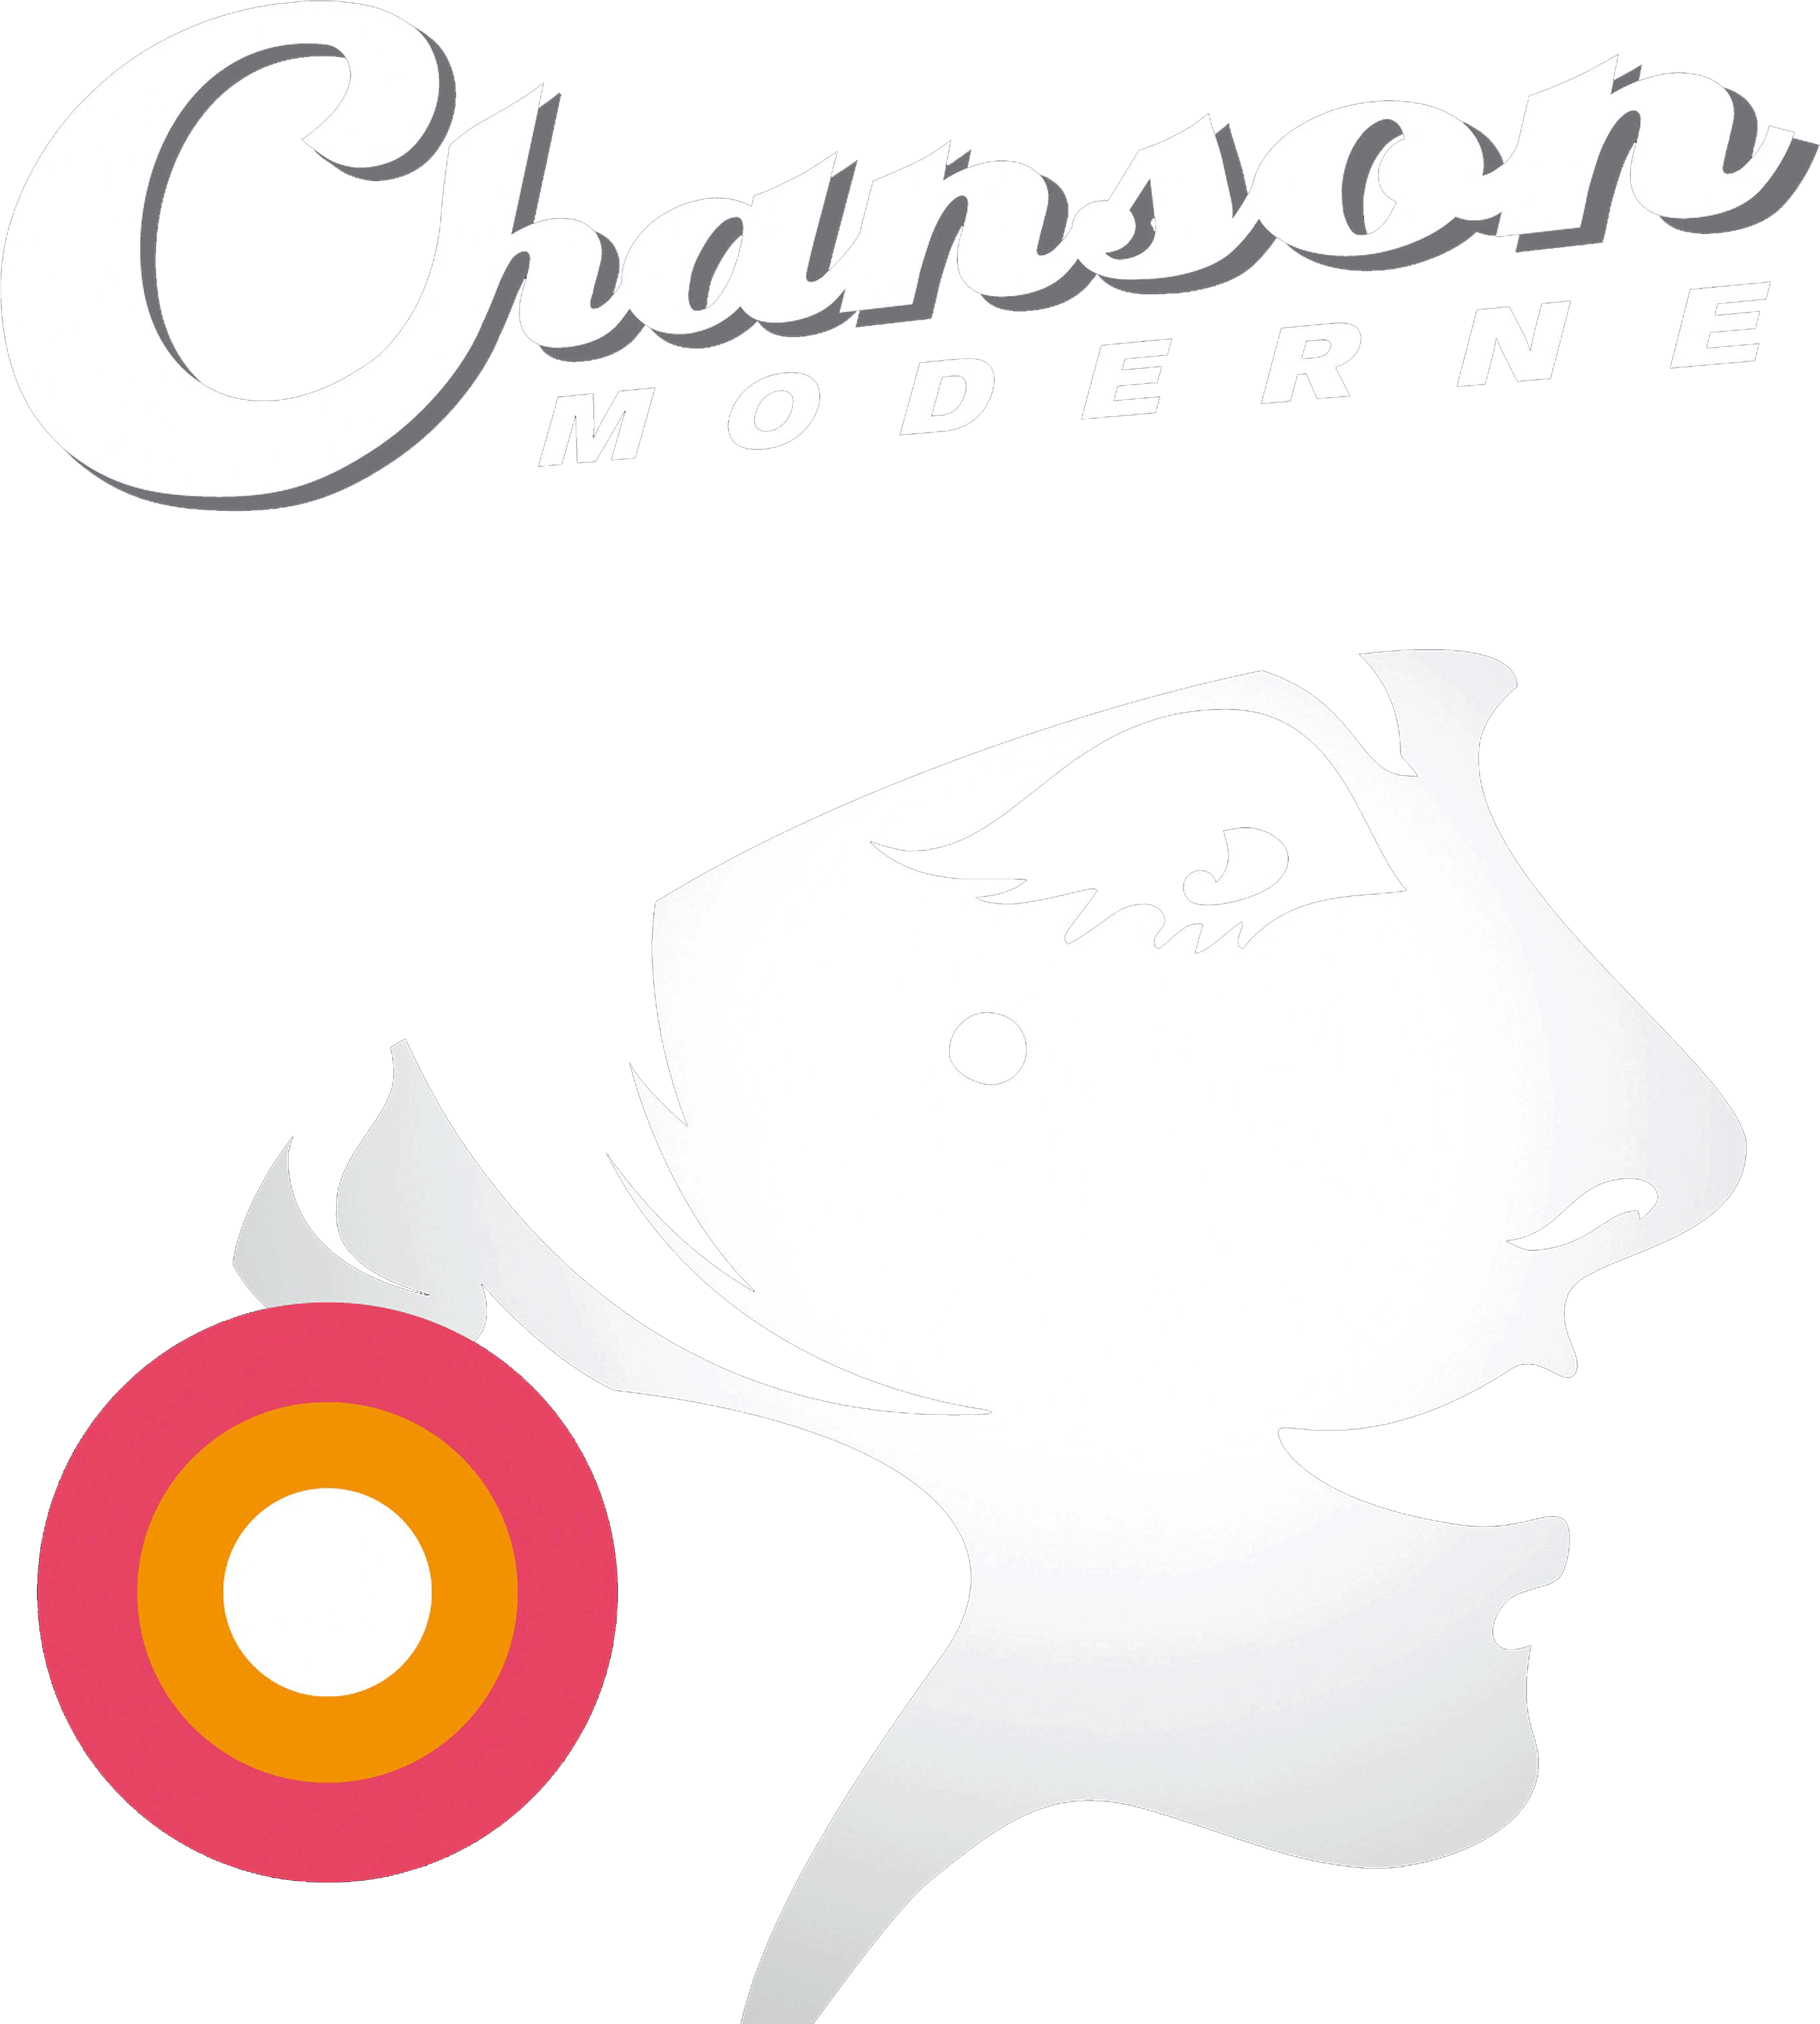 Chanson Moderne